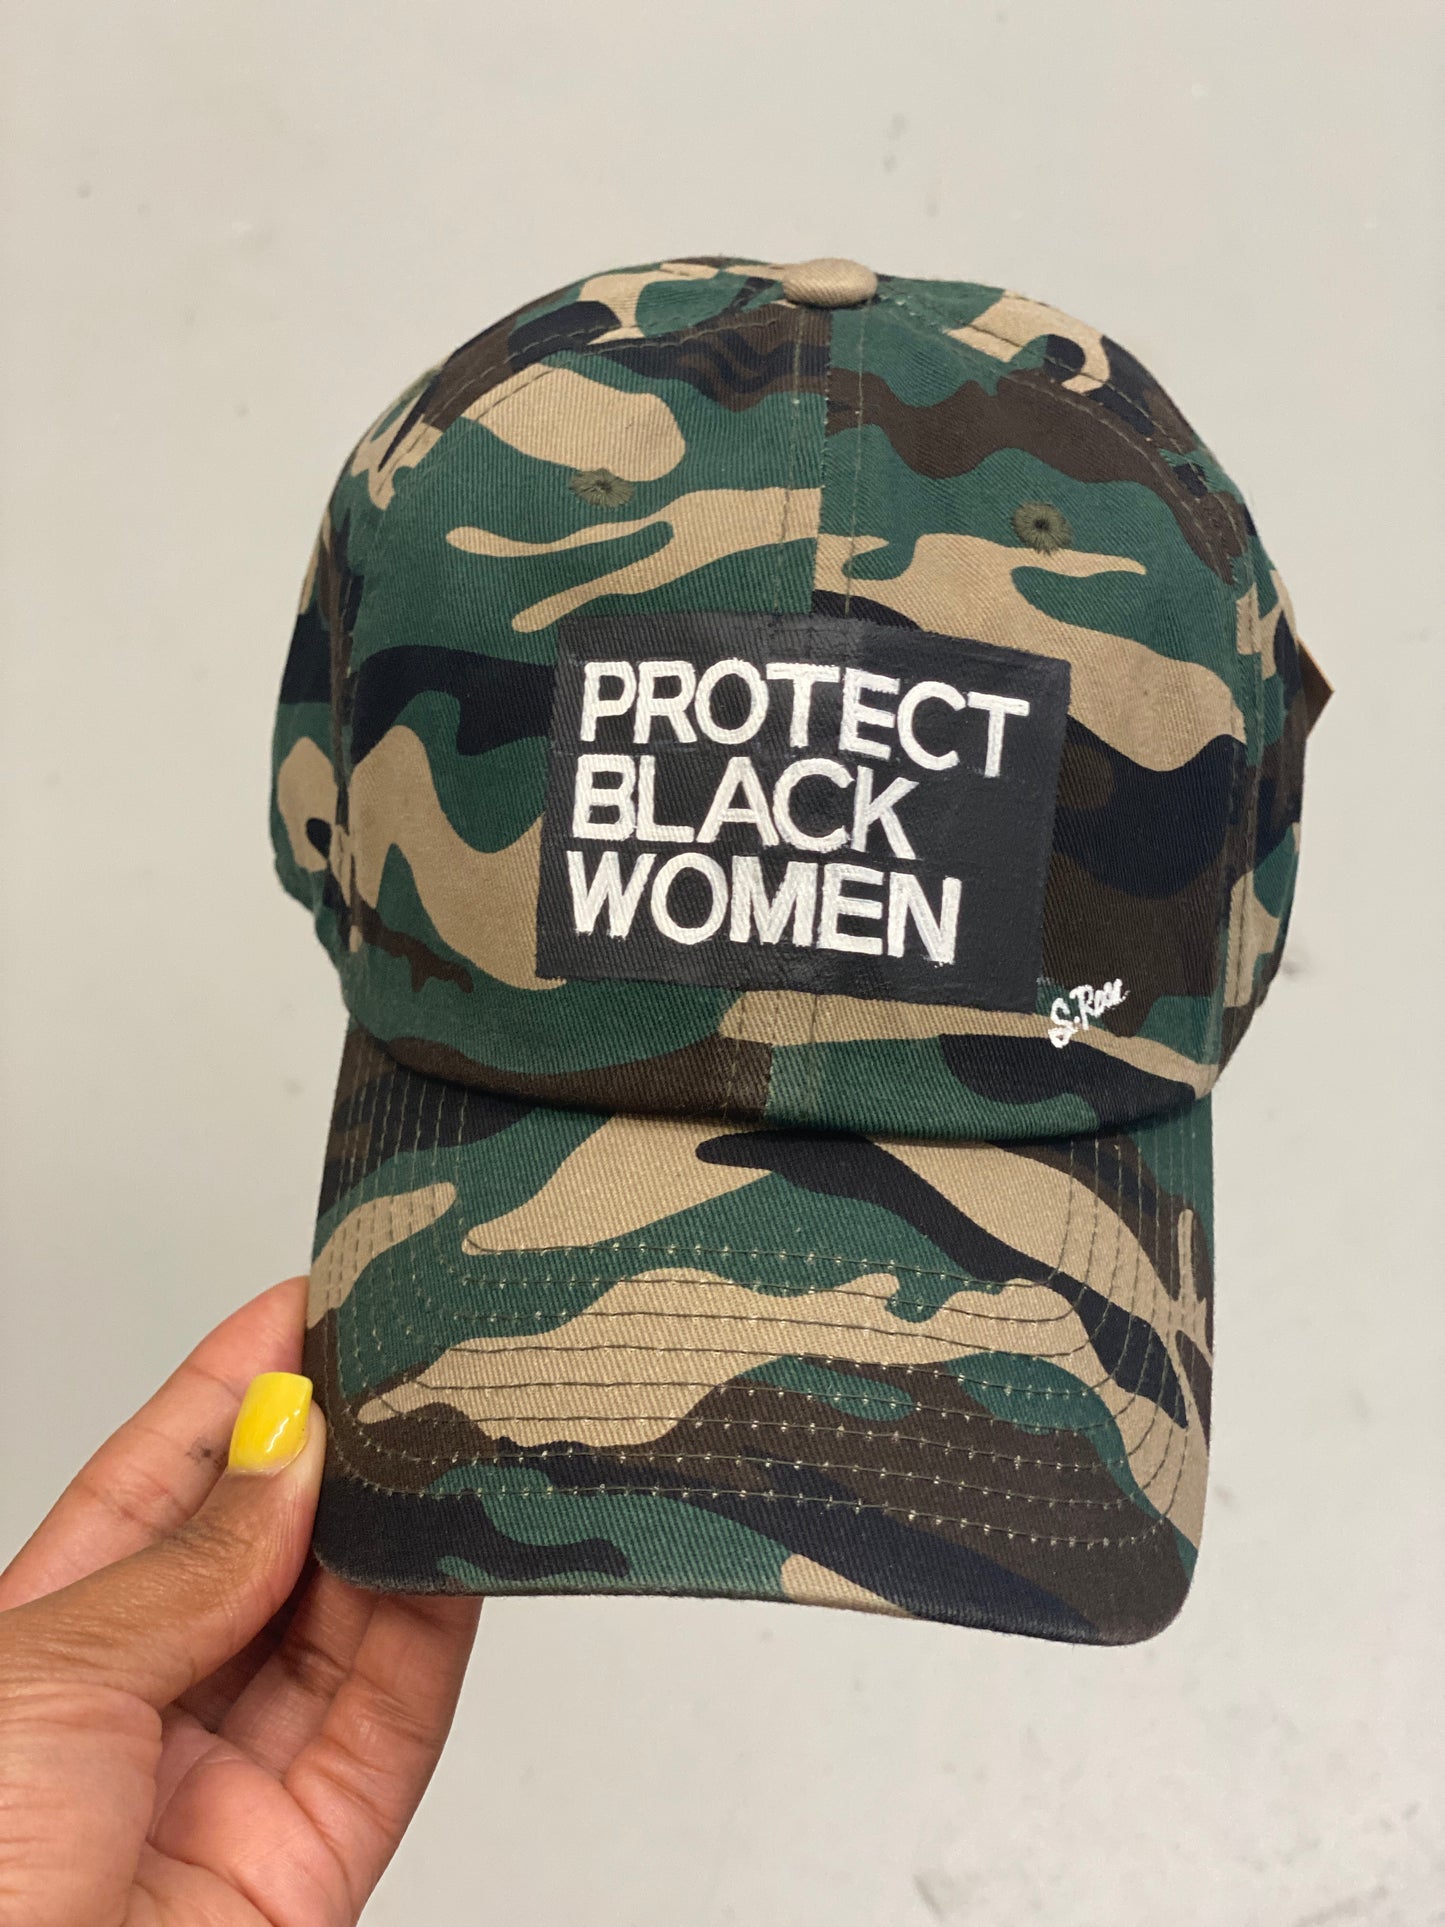 Protect Black Women(camo)